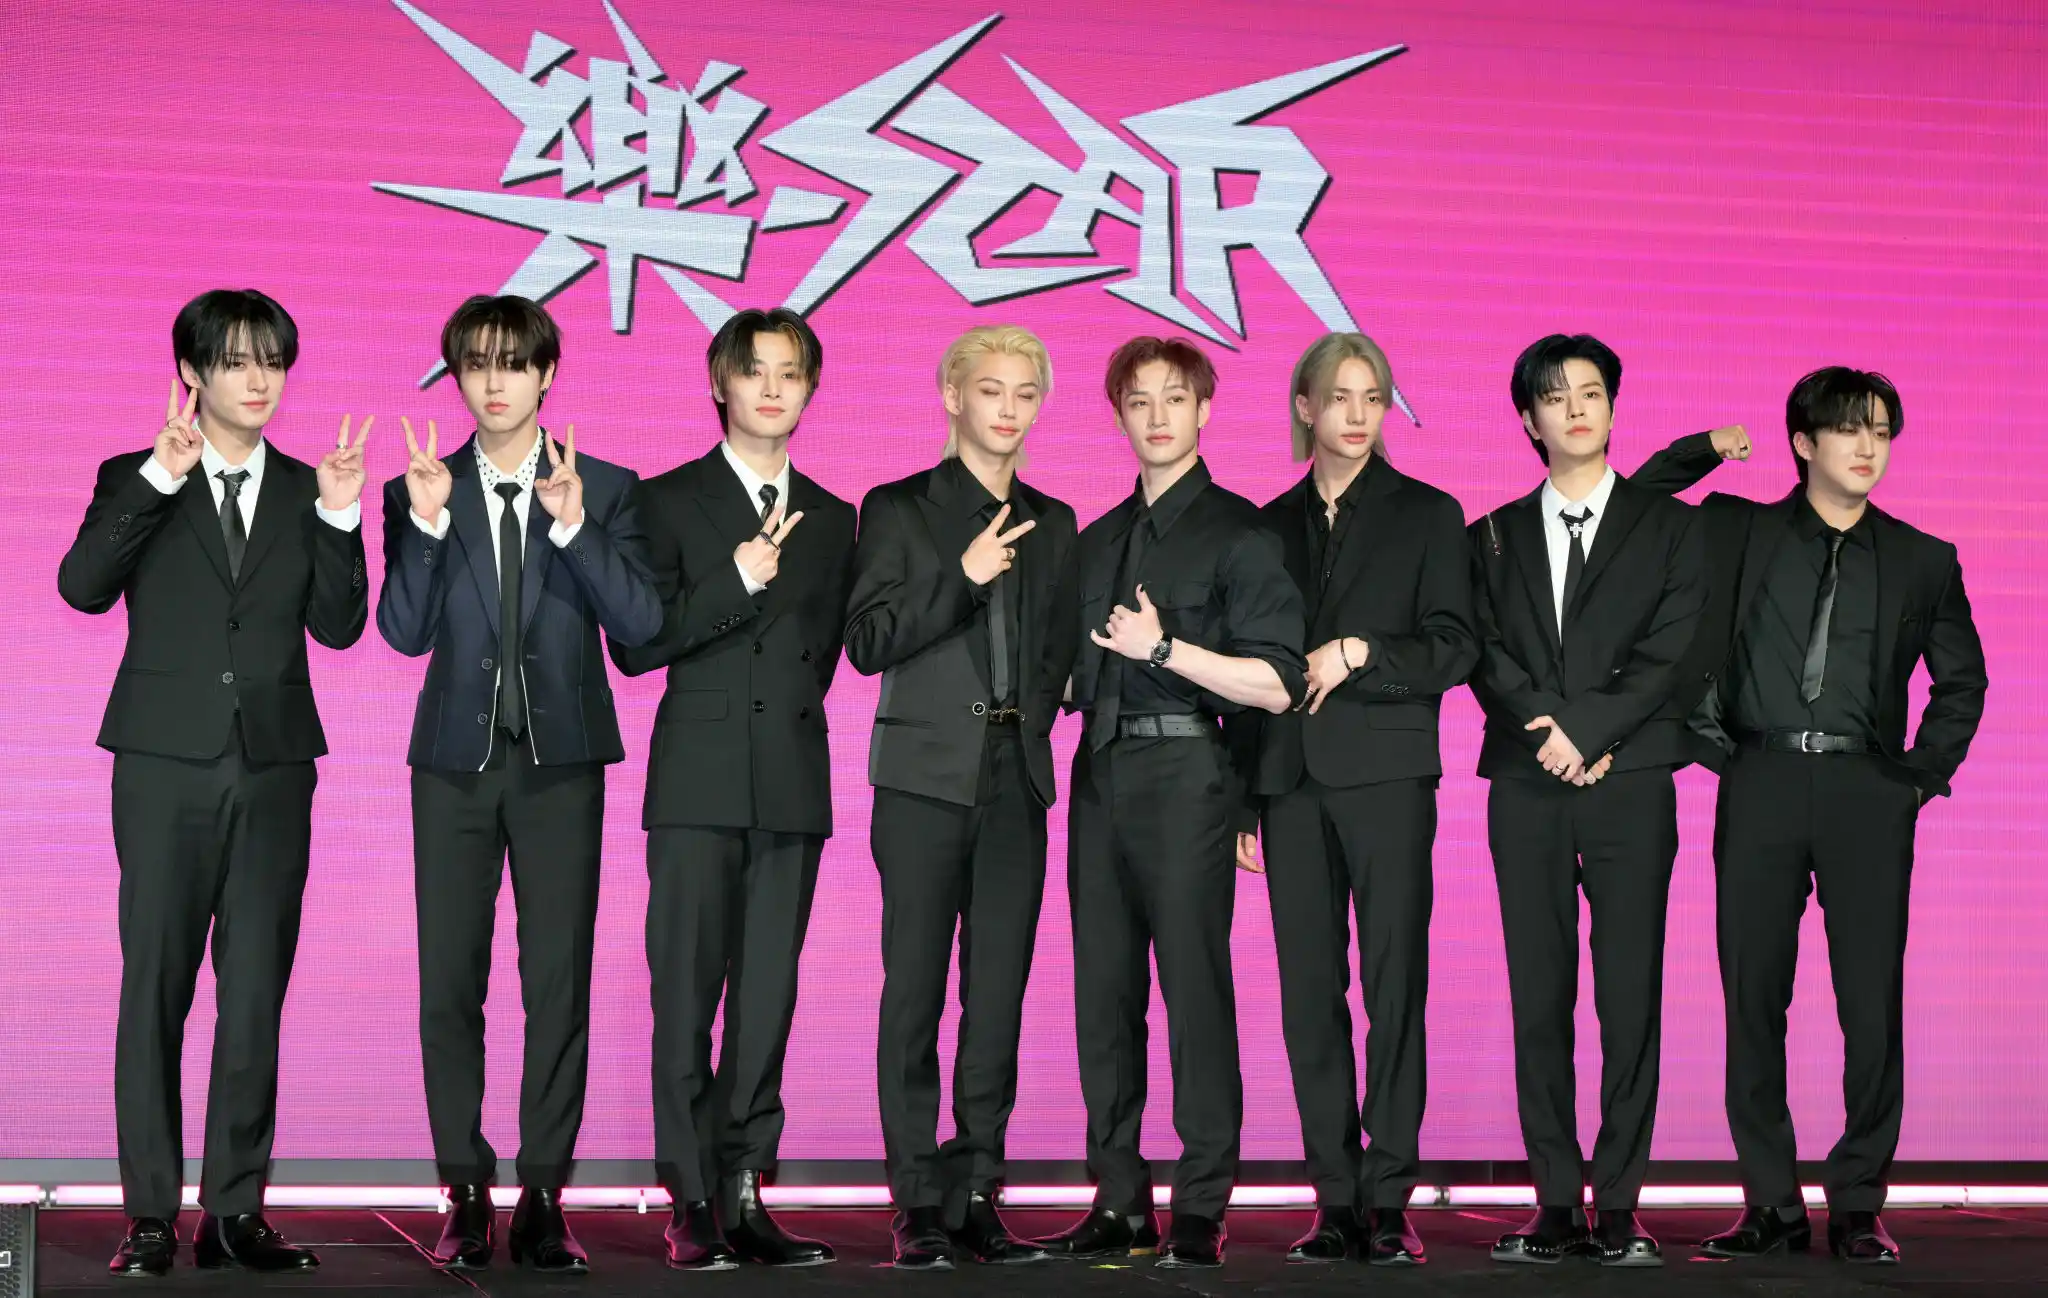 Stray Kids members: Bang Chan, Lee Know, Changbin, Hyunjin, Han, Felix, Seungmin, and I.N.